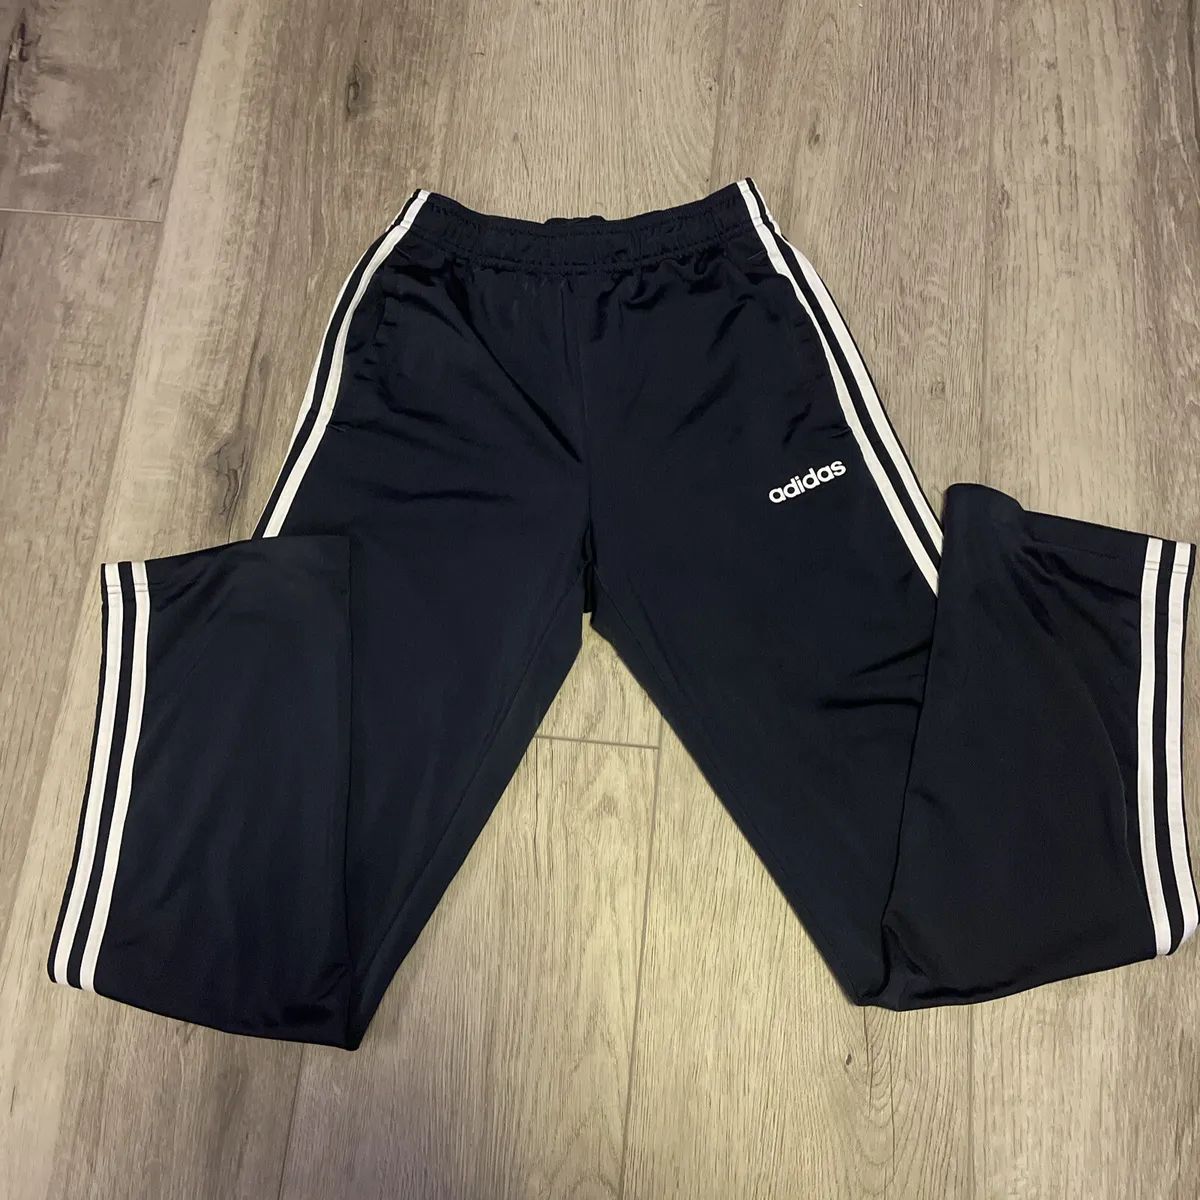 Adidas Mens Track Pants Pockets Dark Navy Blue 3 Stripes Size Small joggers | eBay US